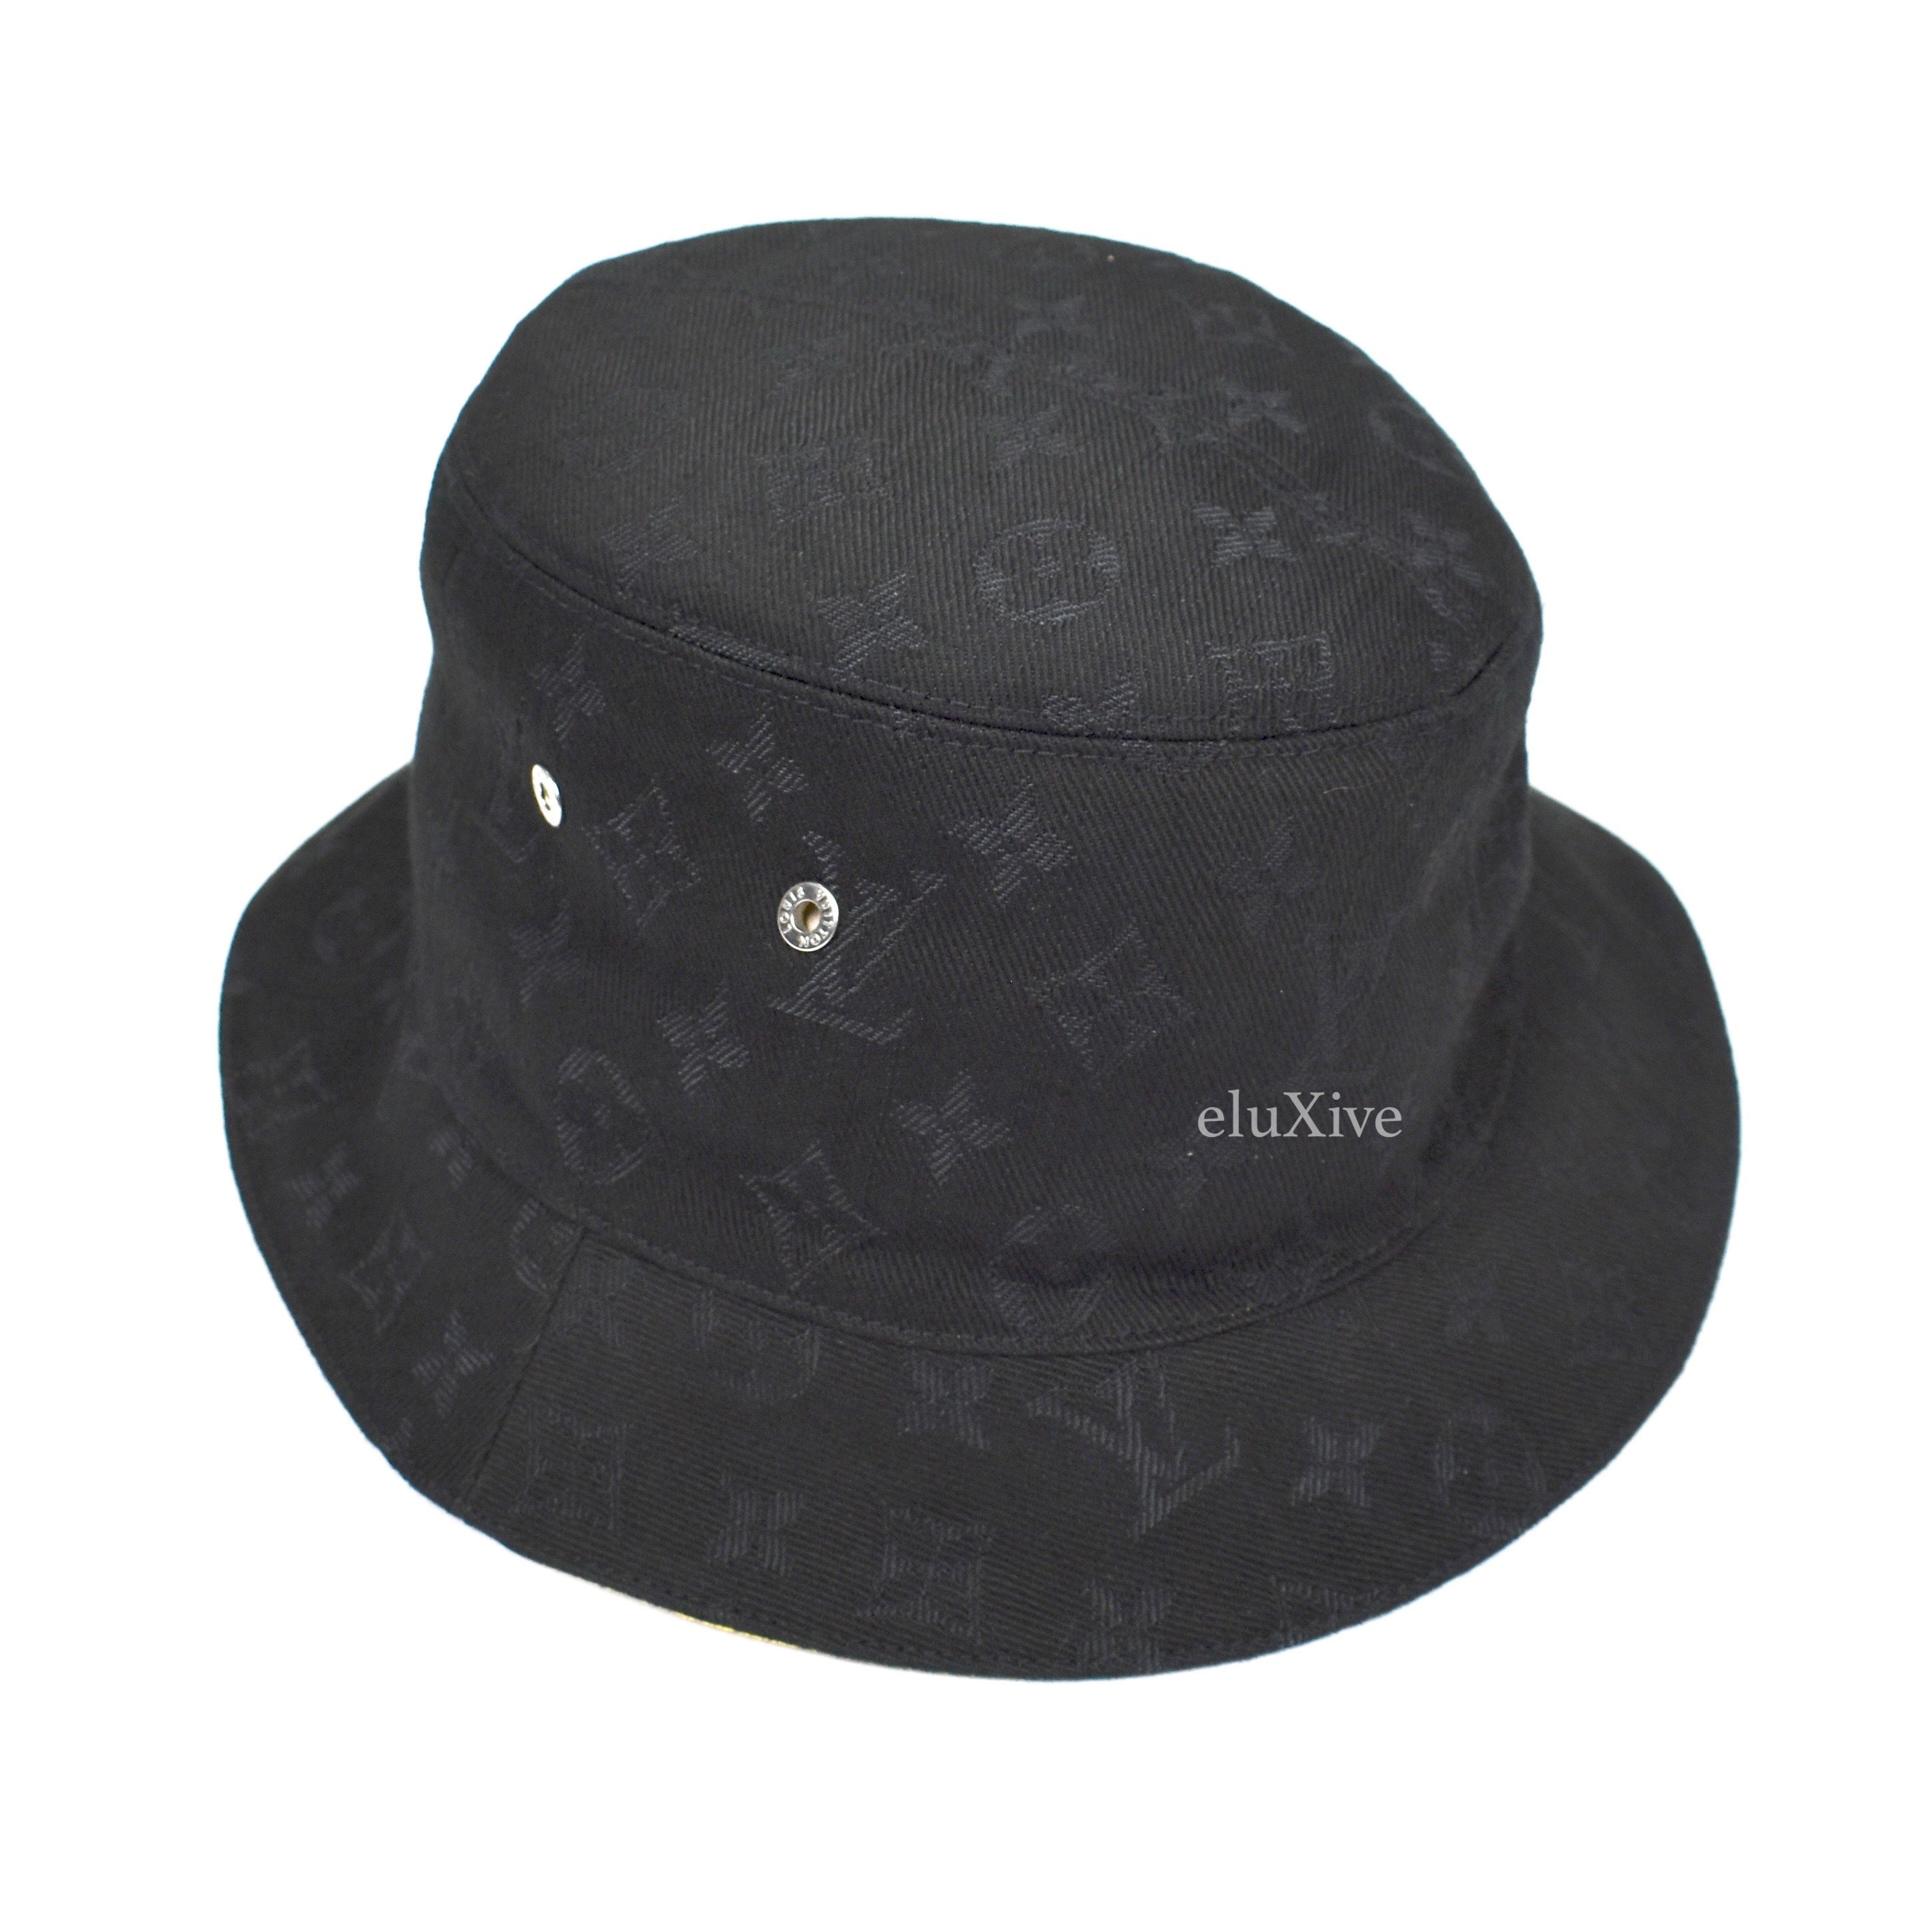 Louis Vuitton Bucket Hat Black/Grey/Noir Monogram